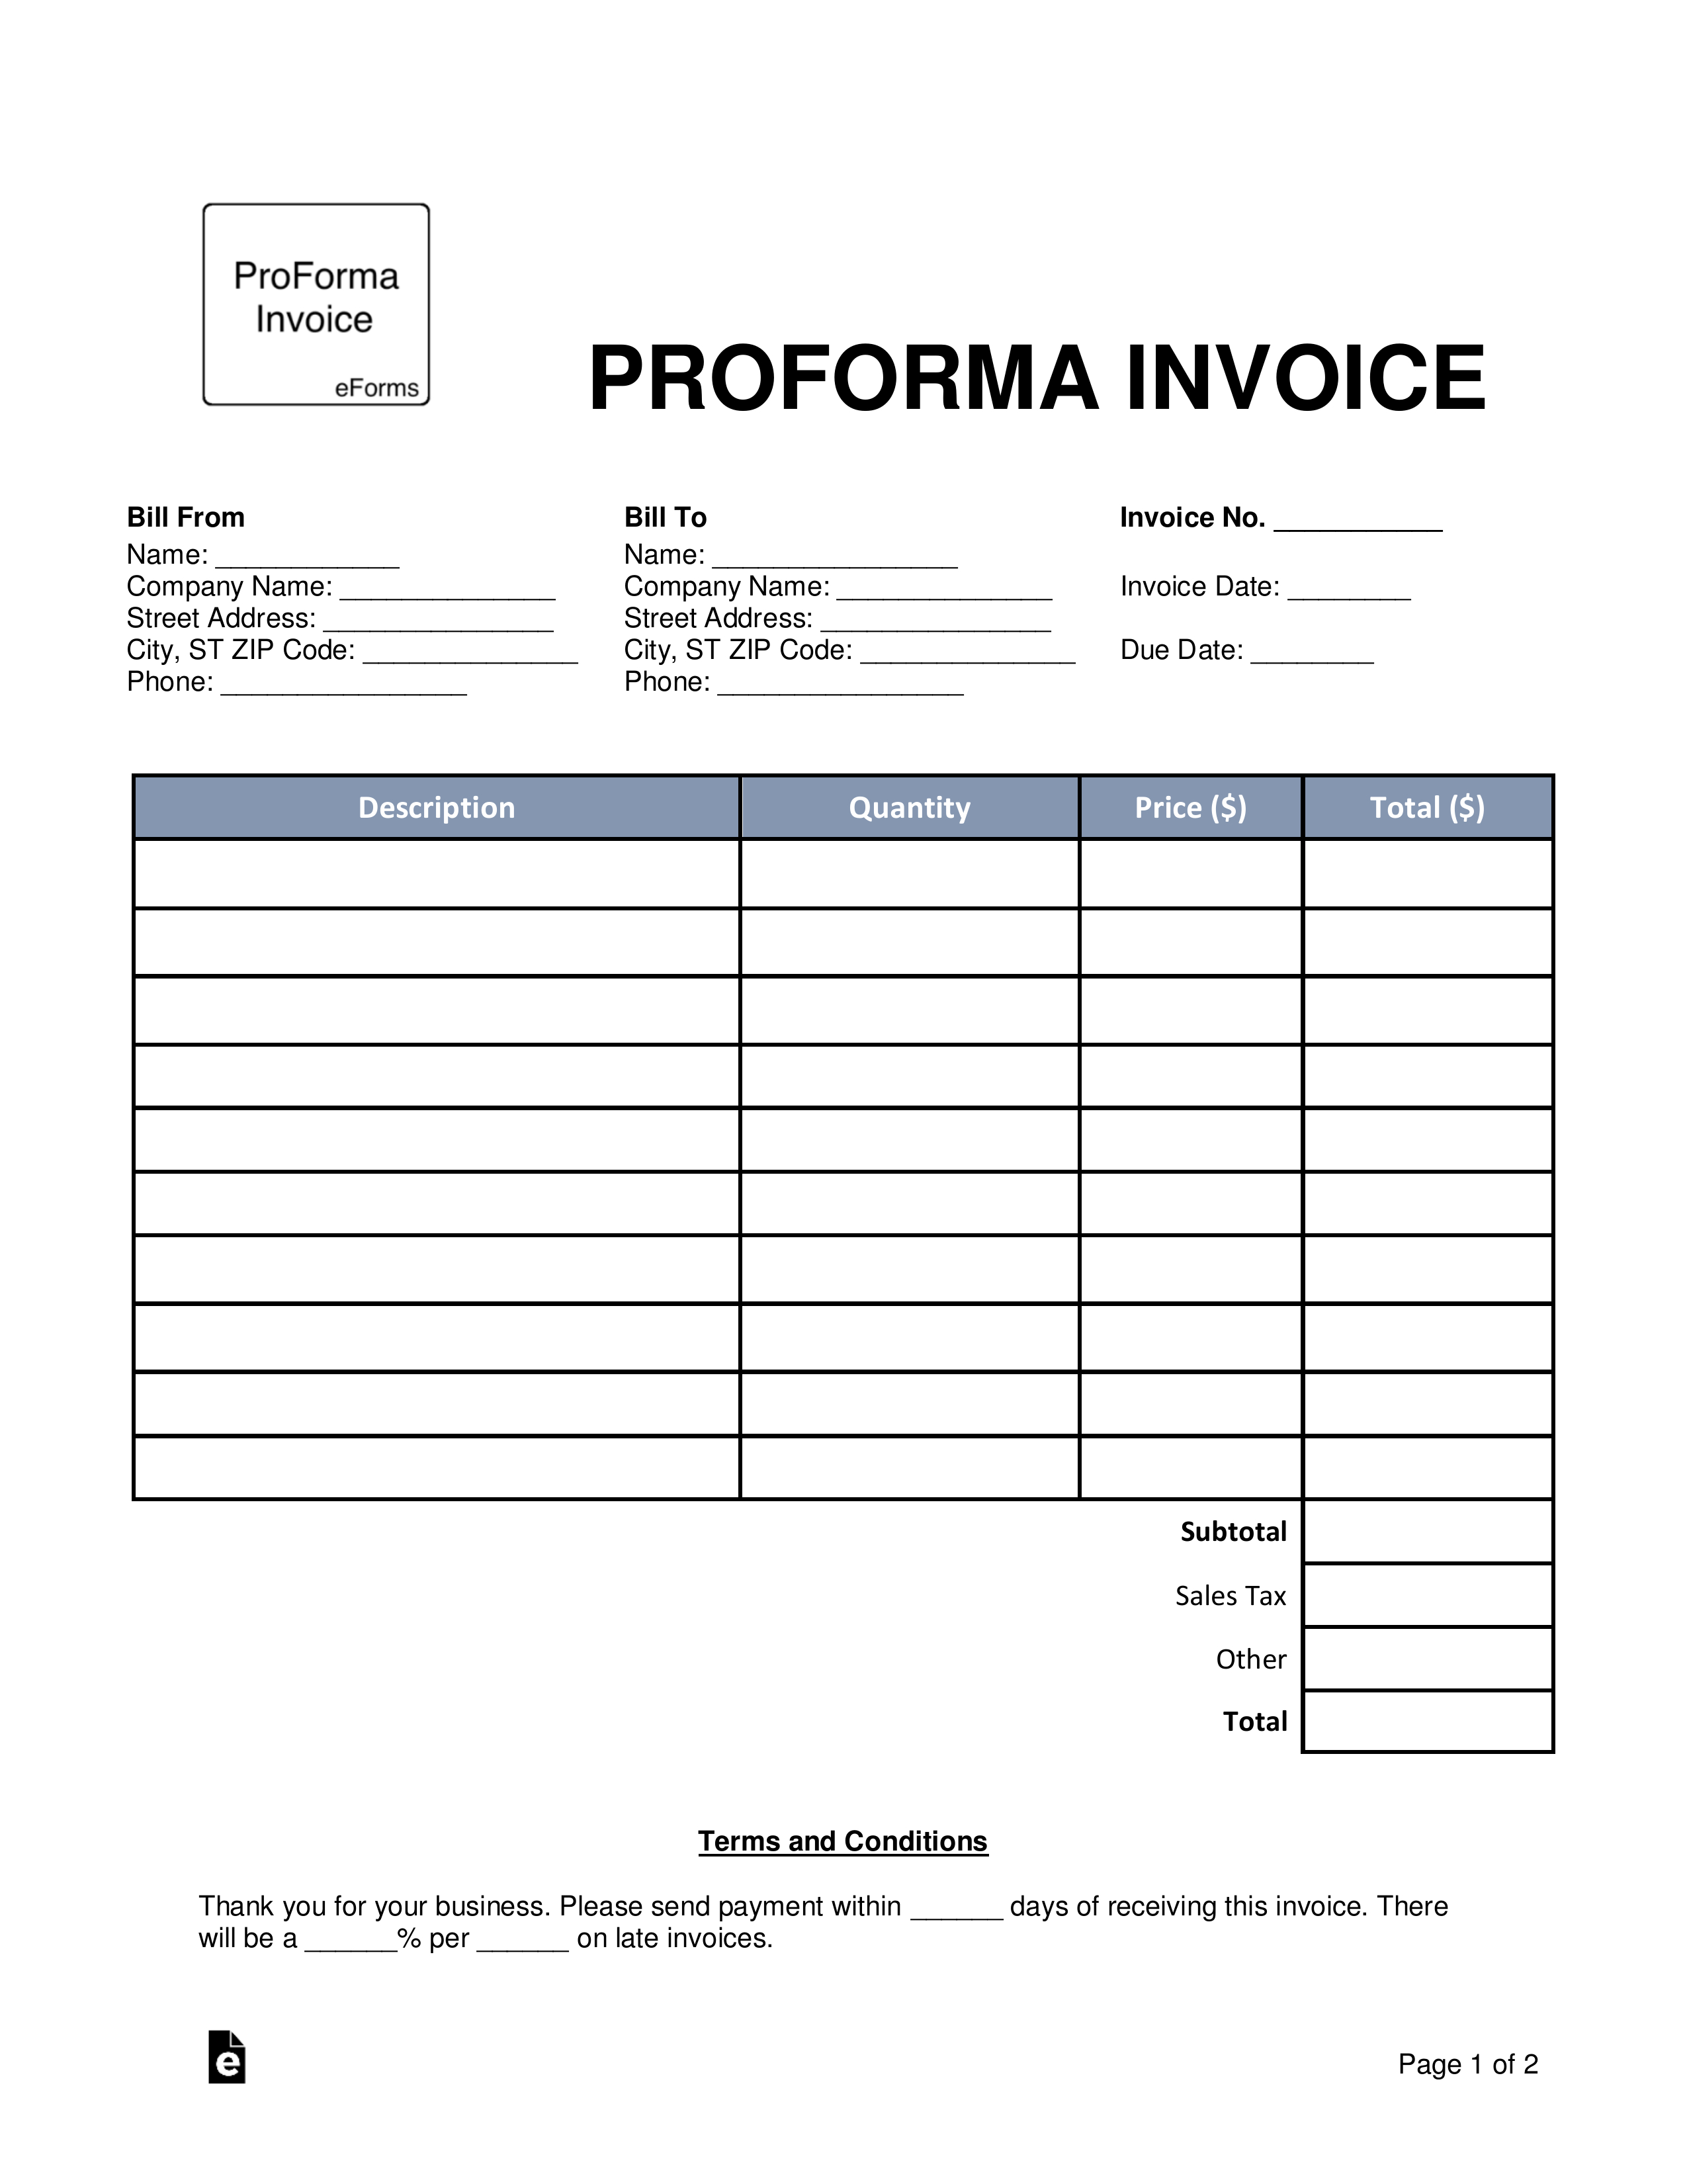 Free Proforma Invoice Template - Word | Pdf | Eforms – Free with regard to Free Proforma Invoice Template Word